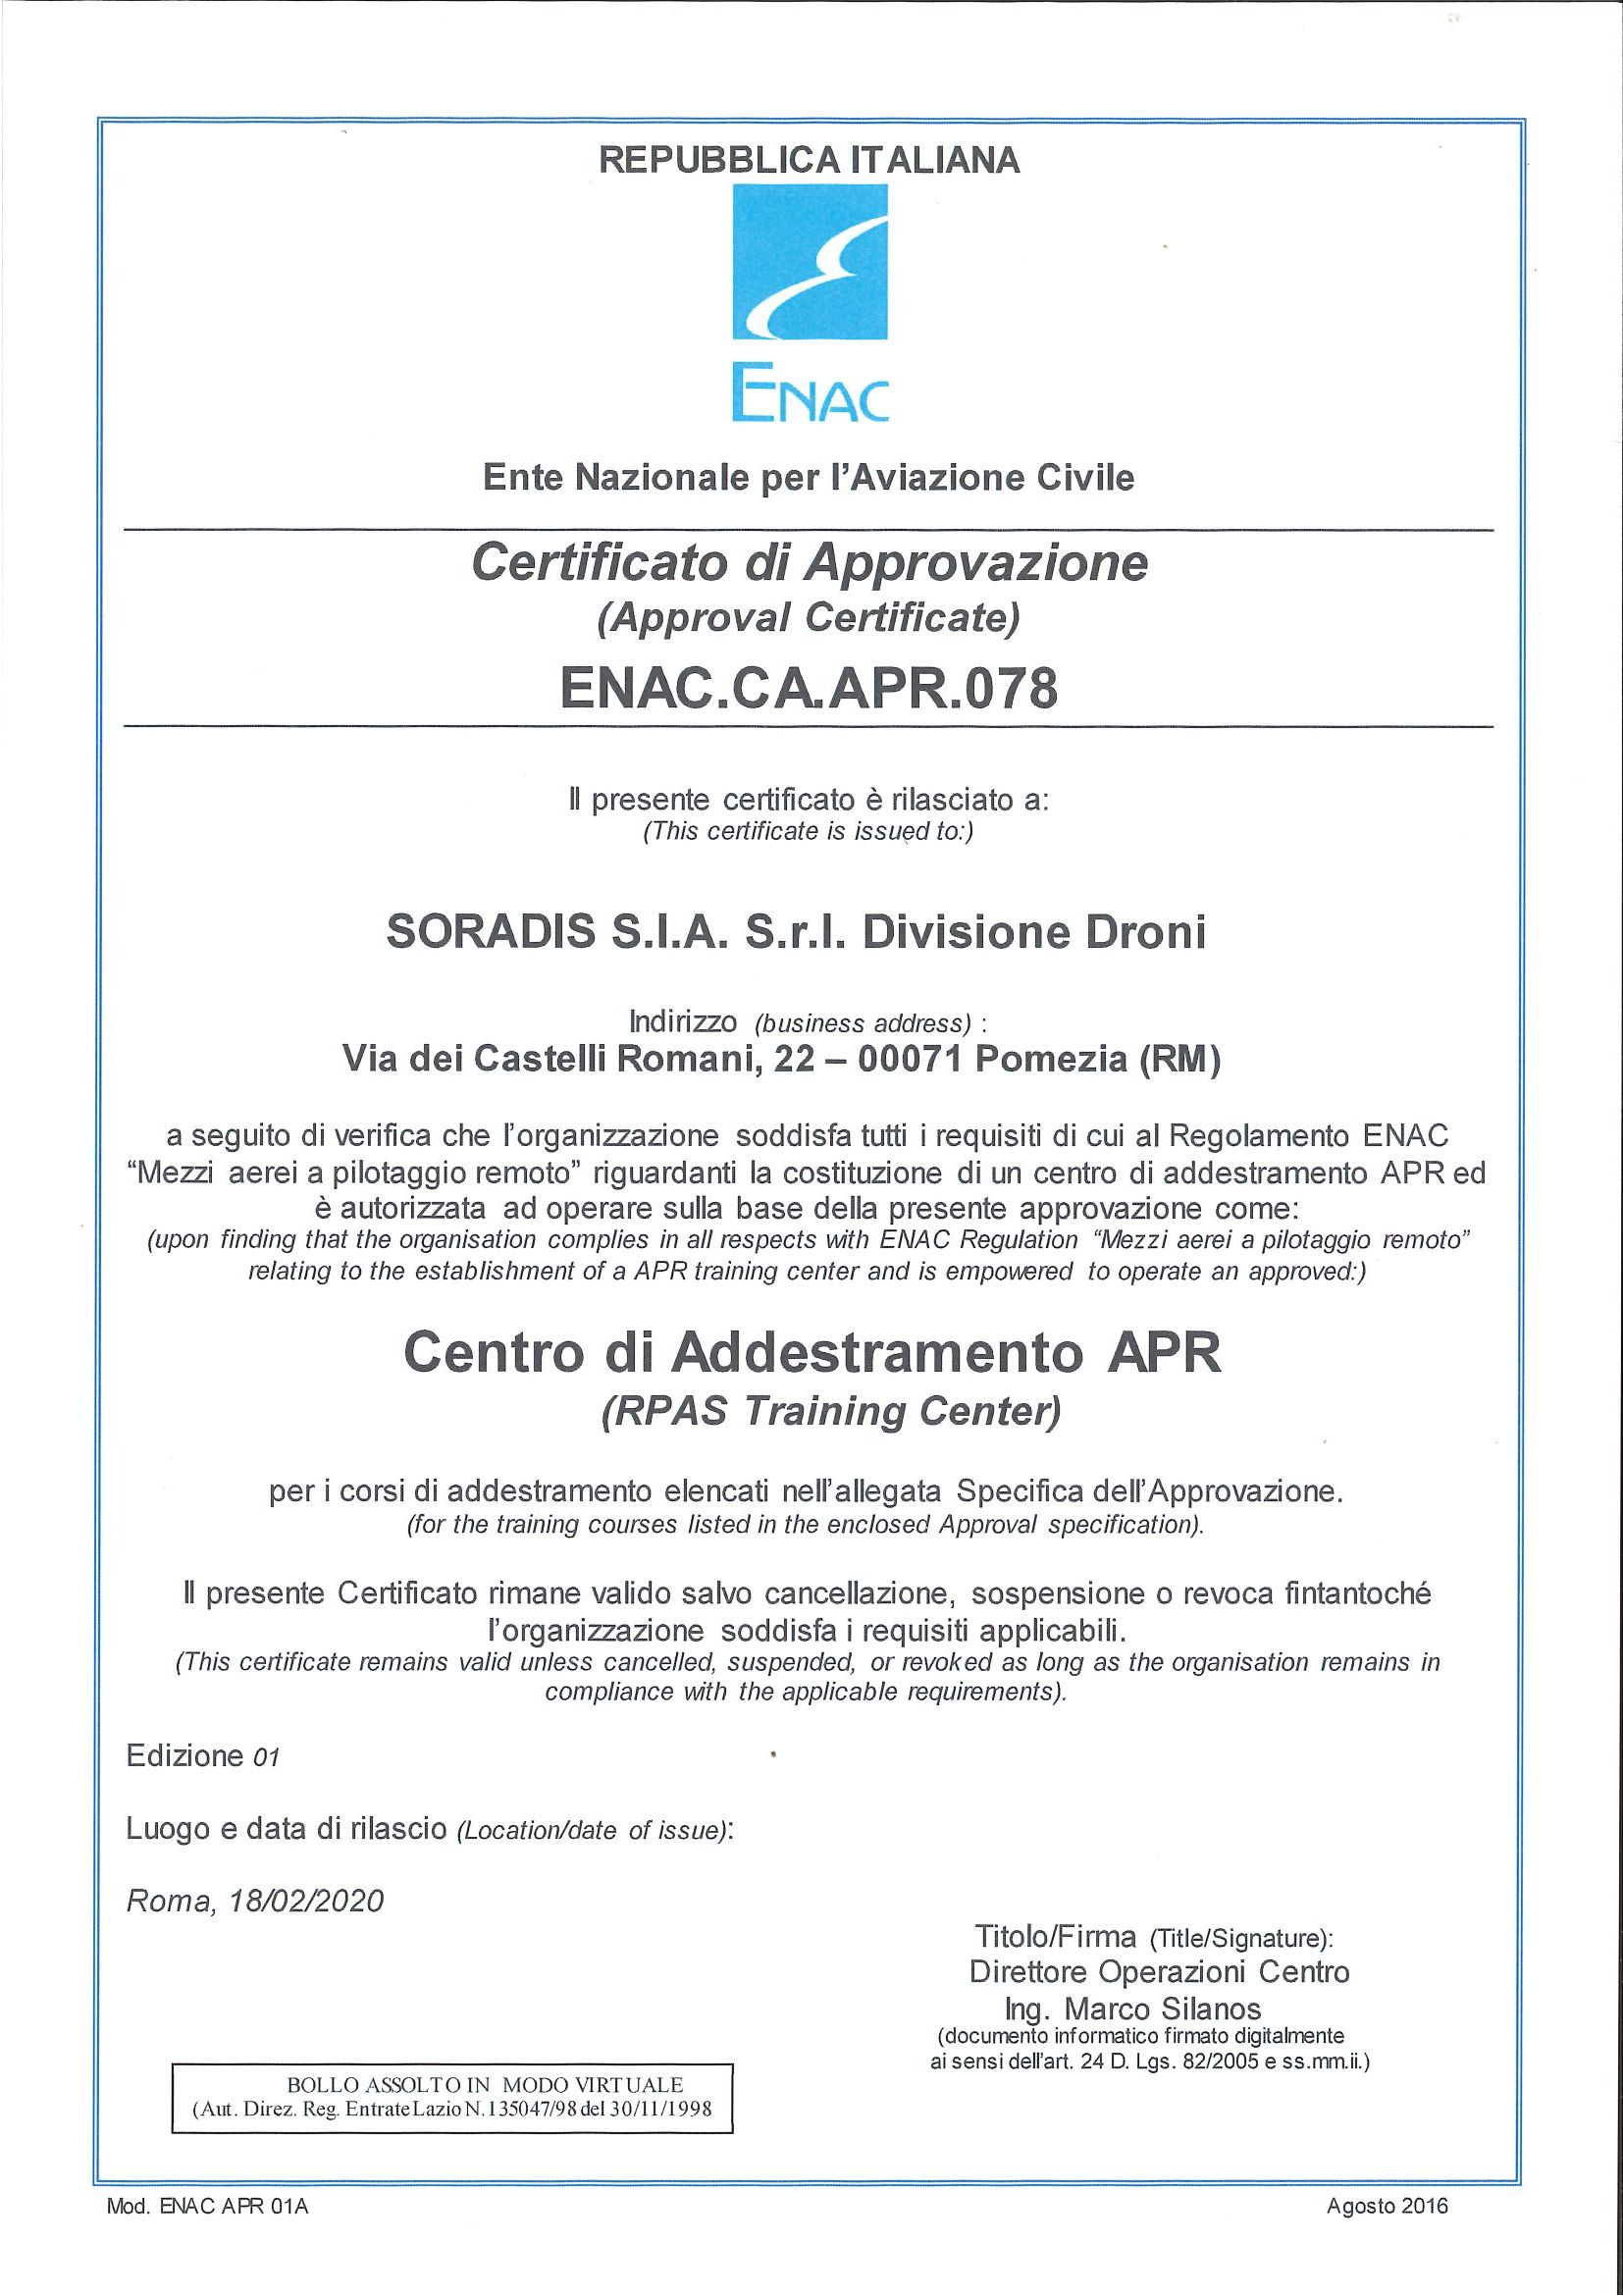 ENAC - Centro addestramento APR